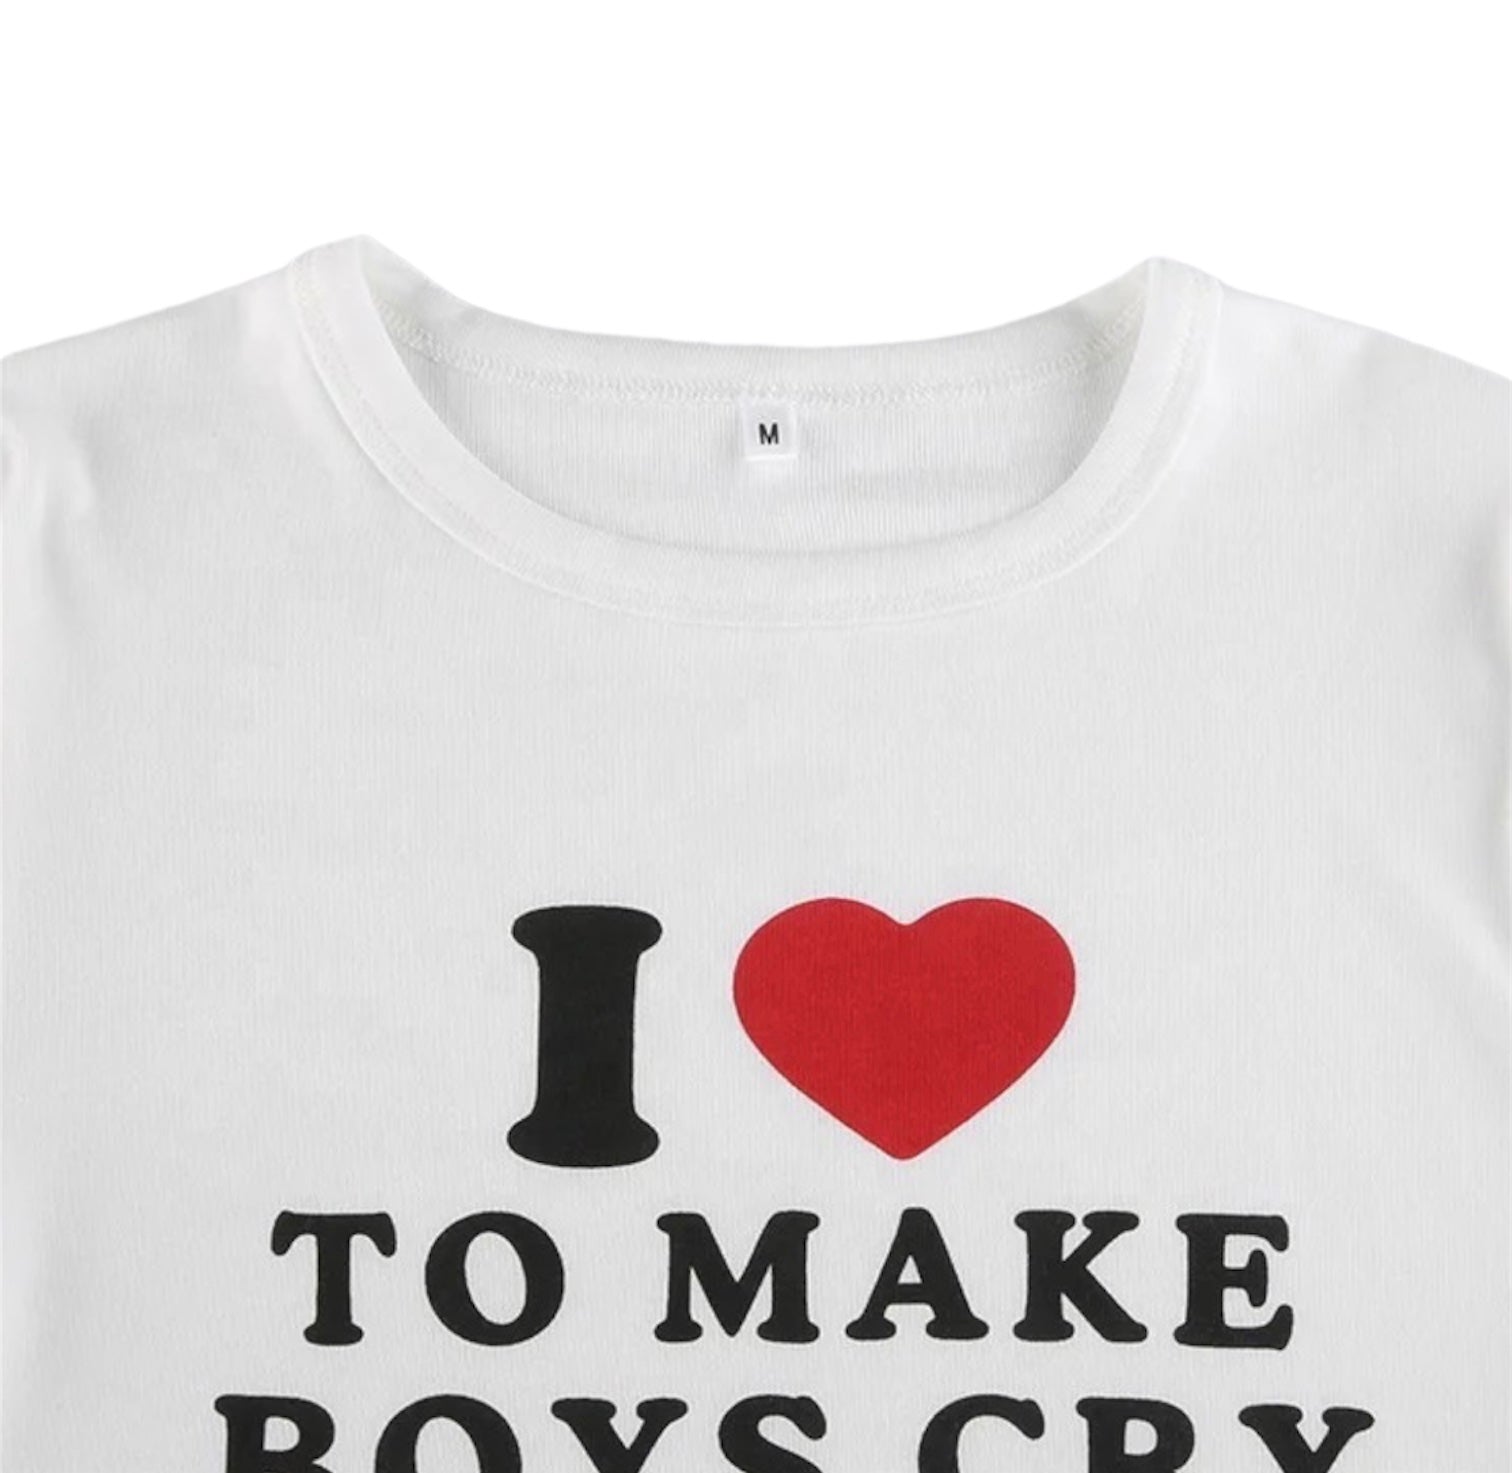 Make Boys Cry Top - spo-cs-disabled, spo-default, spo-disabled, spo-notify-me-disabled